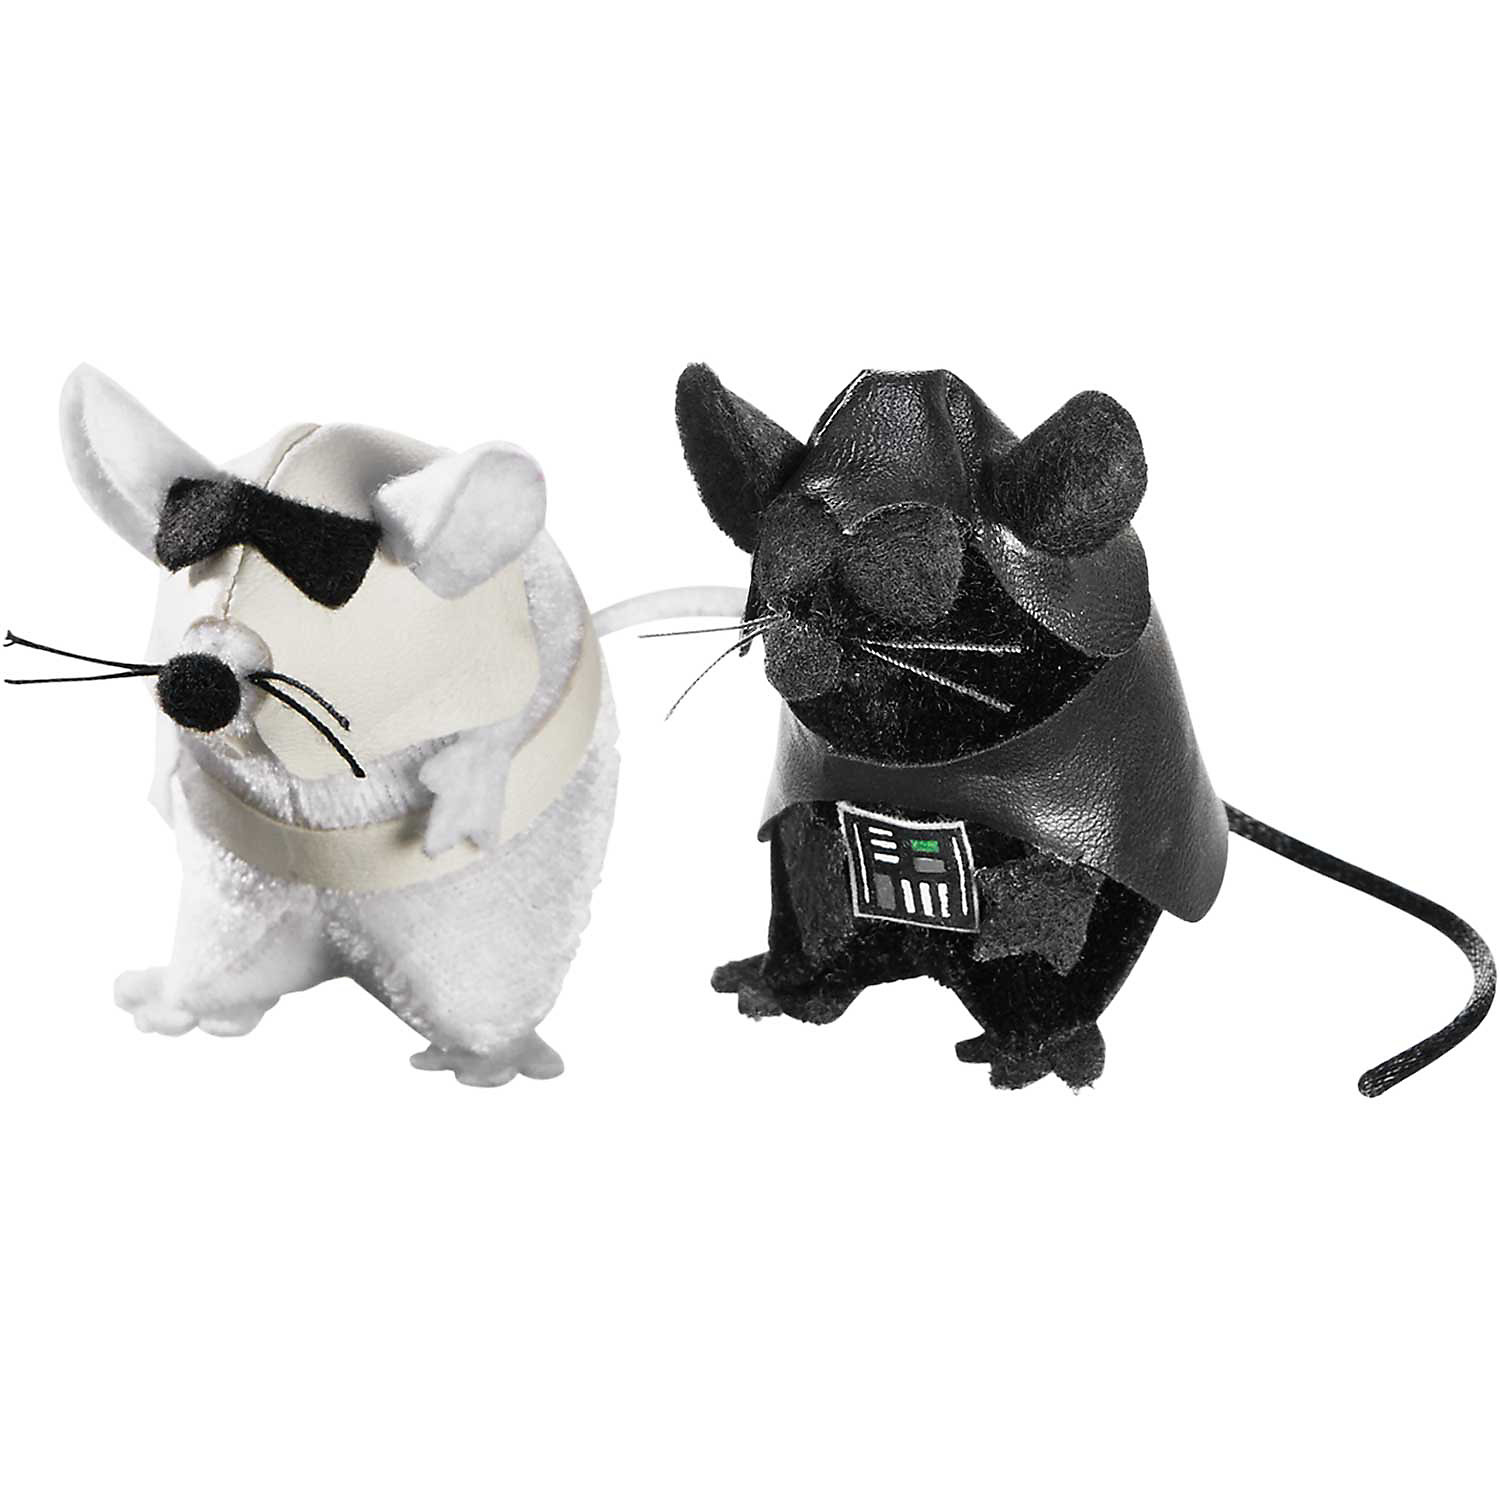 STAR WARS Darth Vader & Stormtrooper Mice Cat Toys, Pack of 